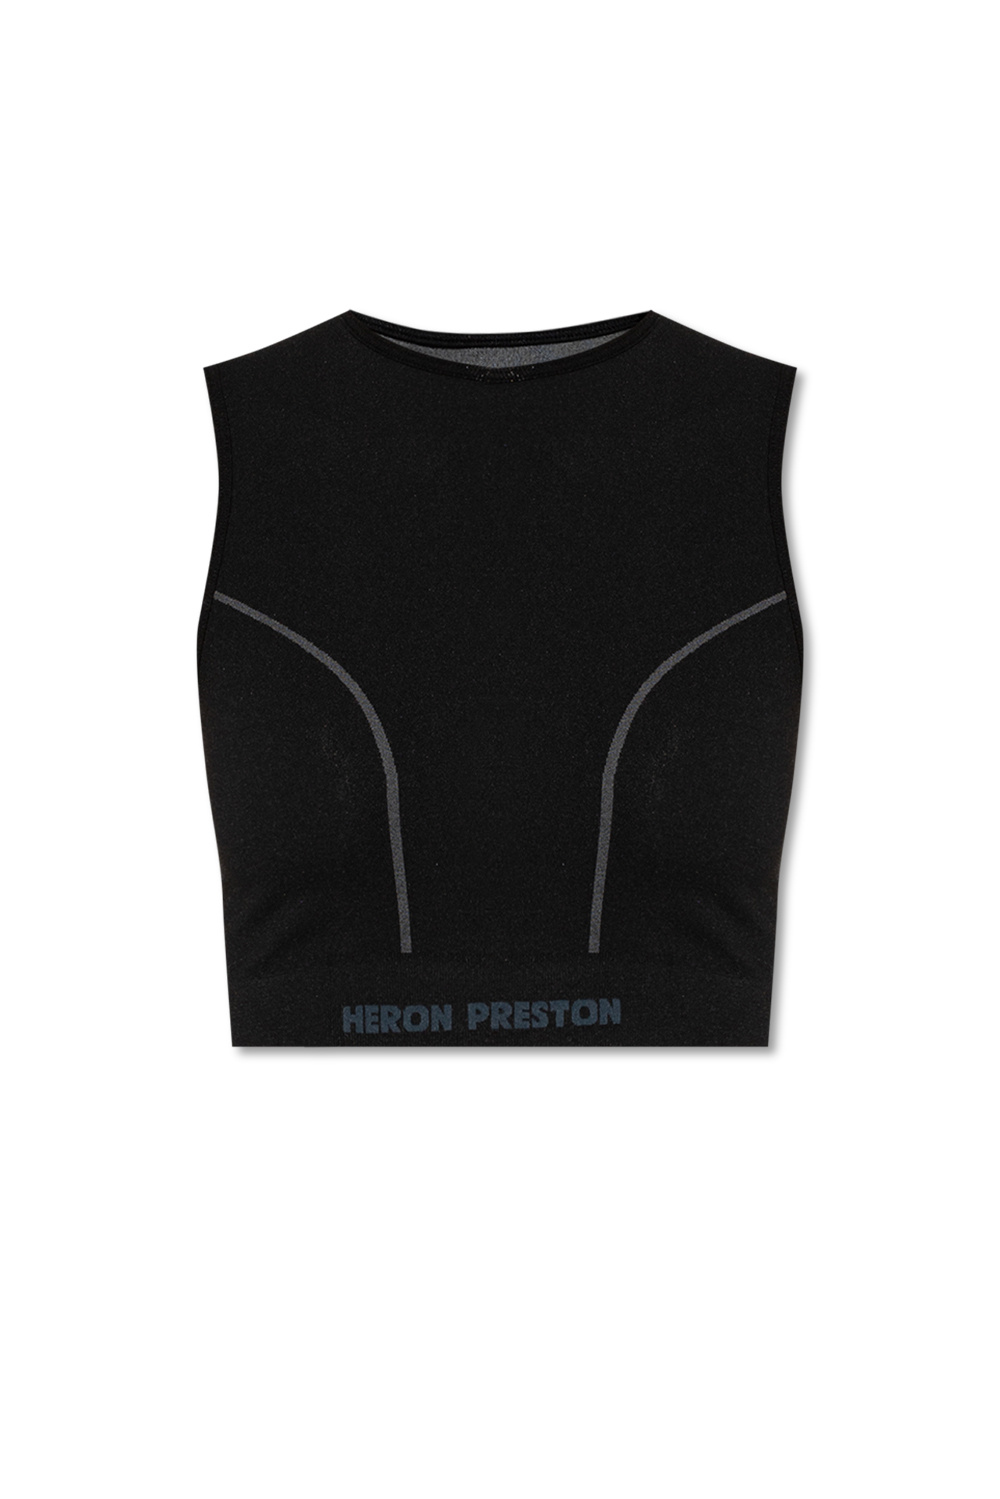 Heron Preston Cropped top